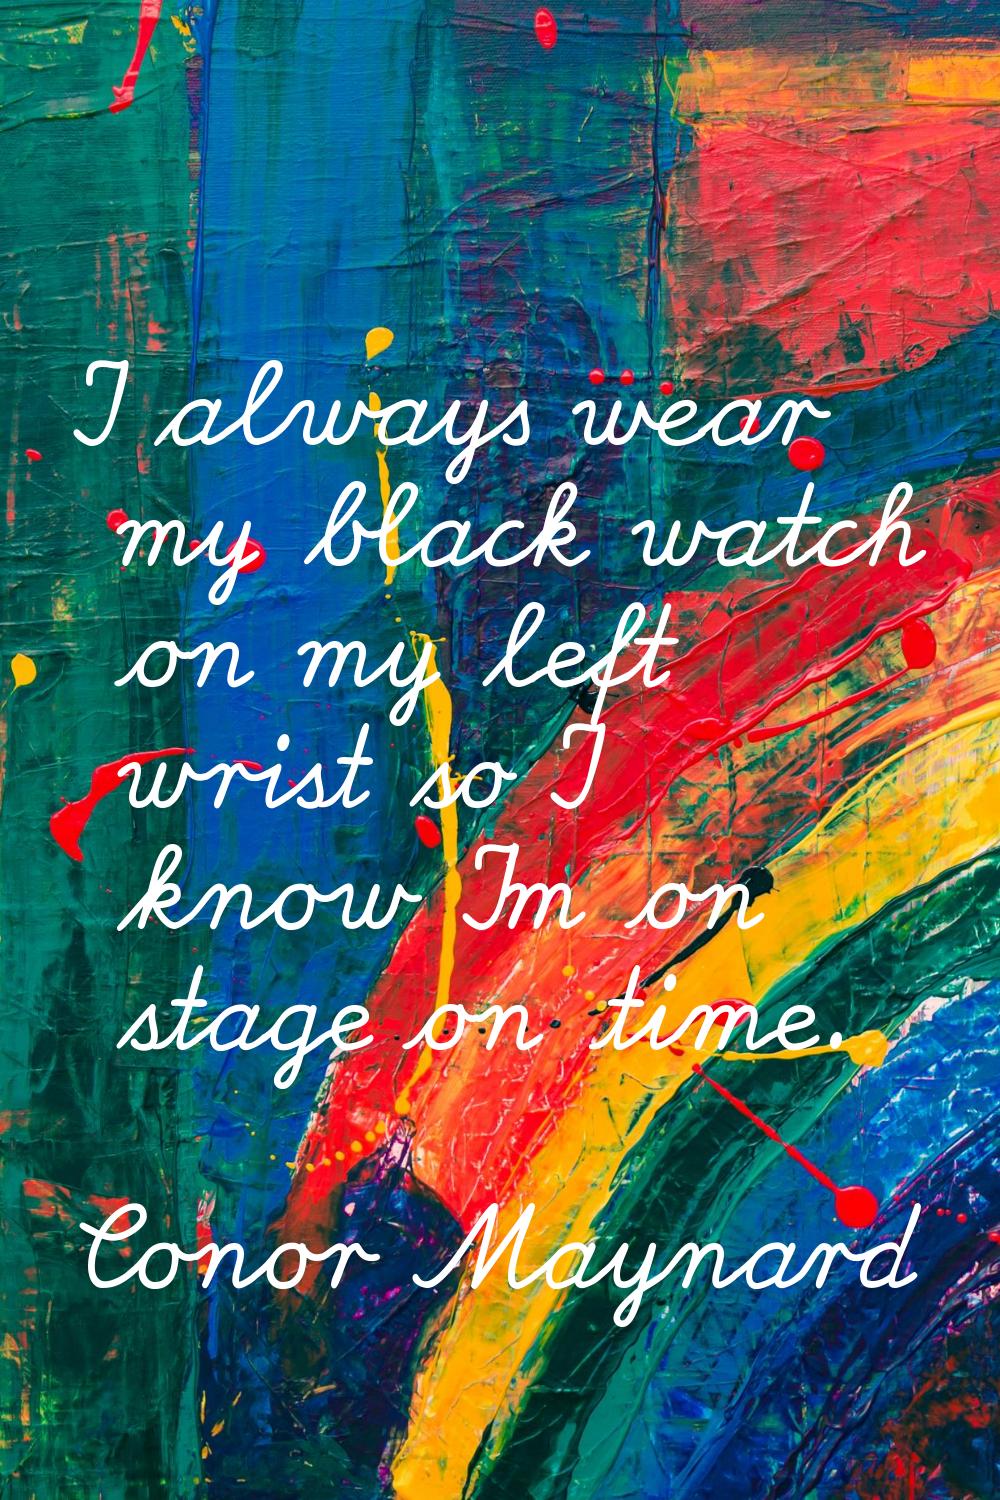 I always wear my black watch on my left wrist so I know I'm on stage on time.